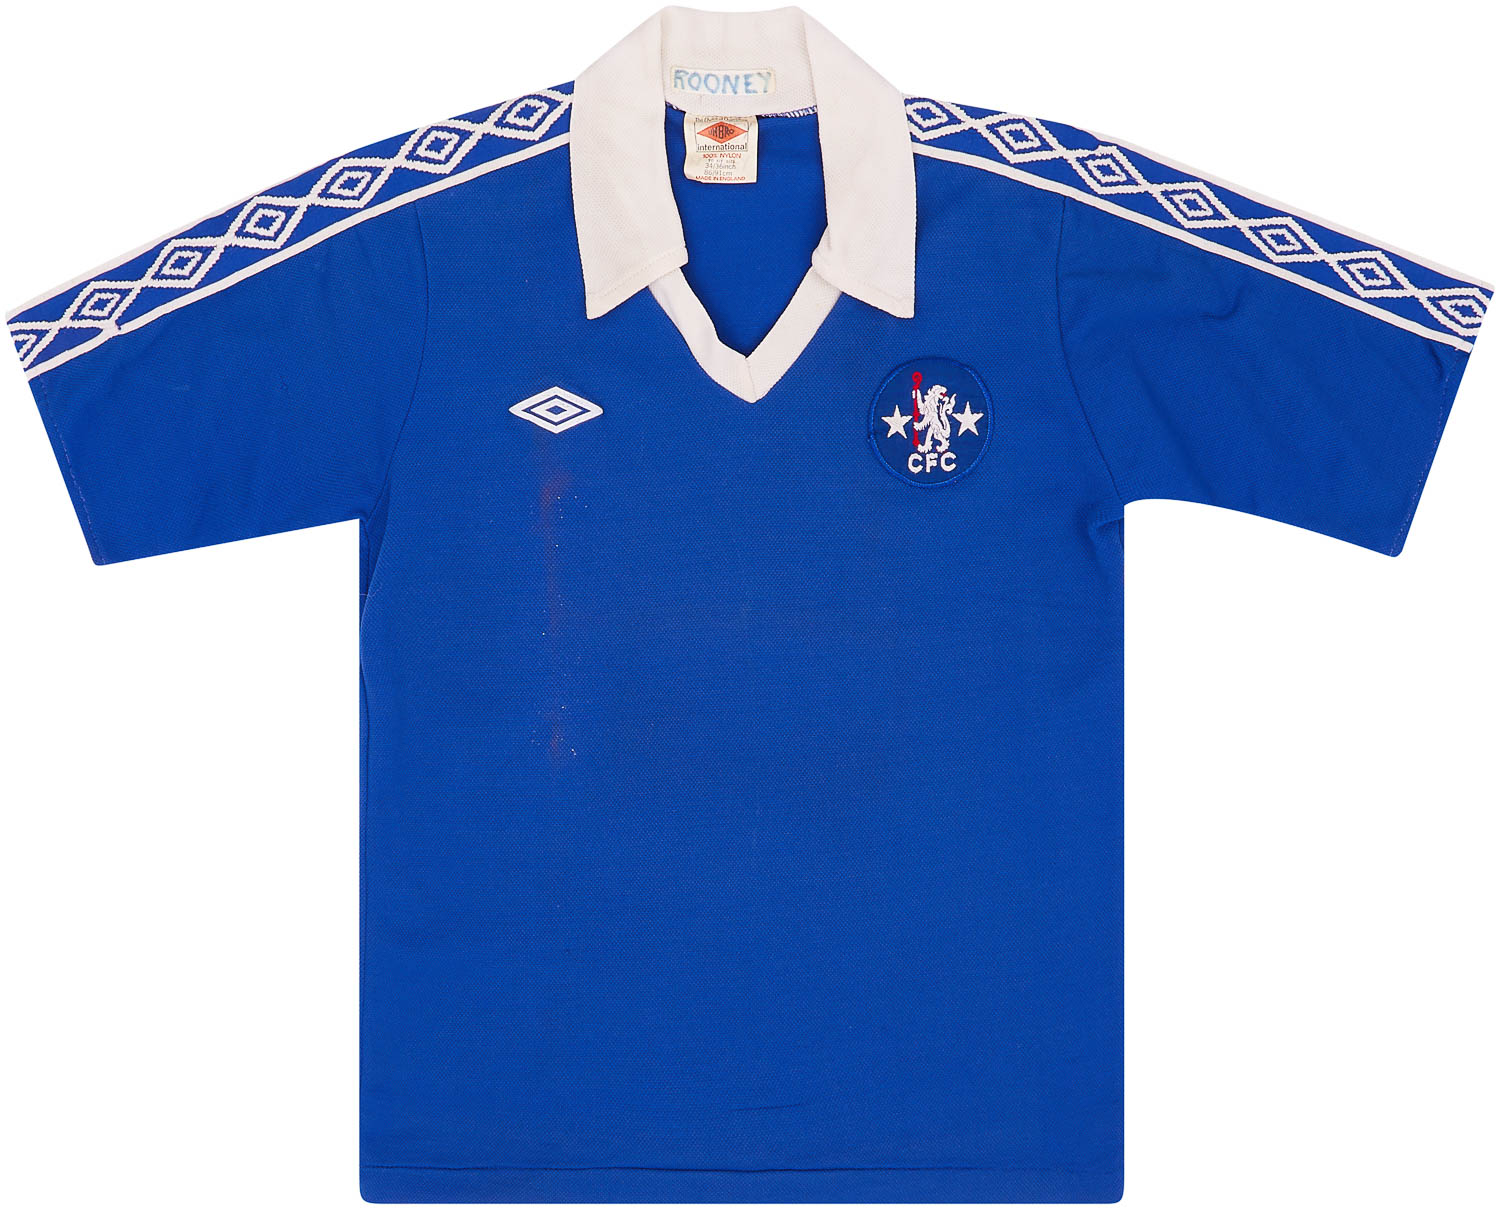 1979-81 Chelsea Home Shirt - 5/10 - ()